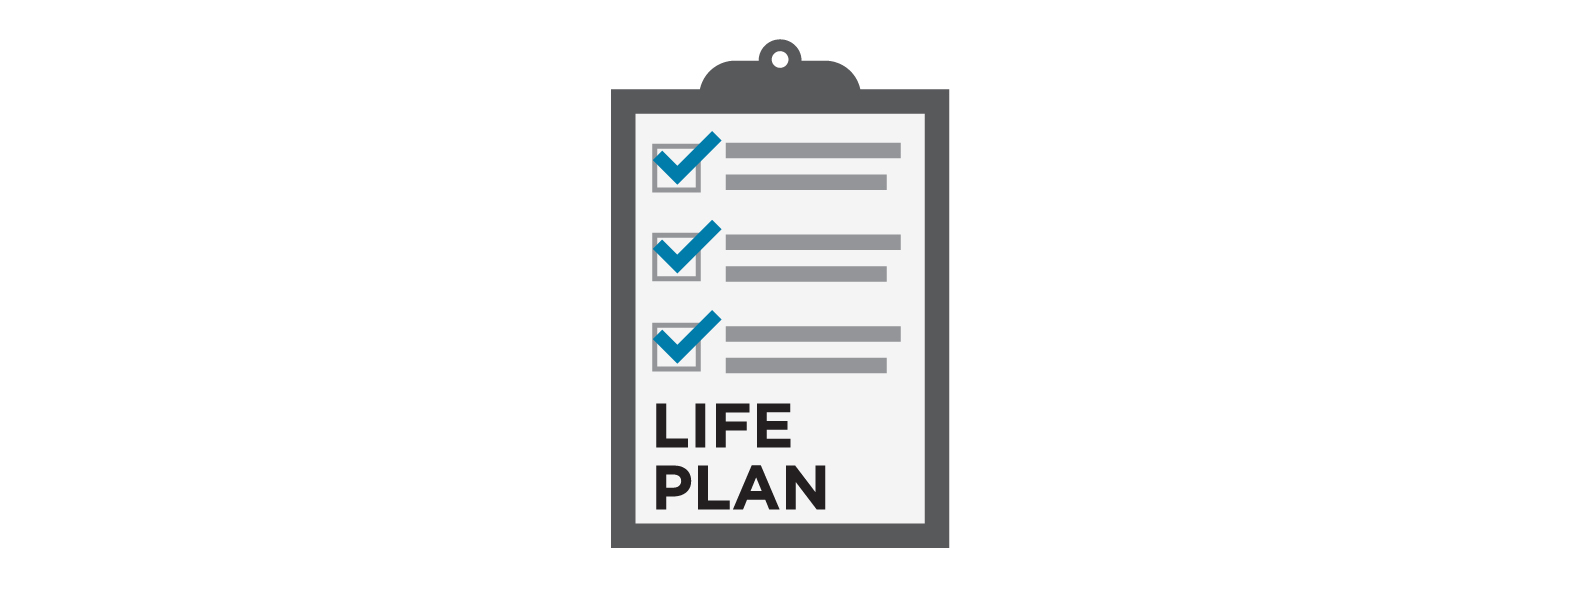 FIDA-IDD life plan illustration